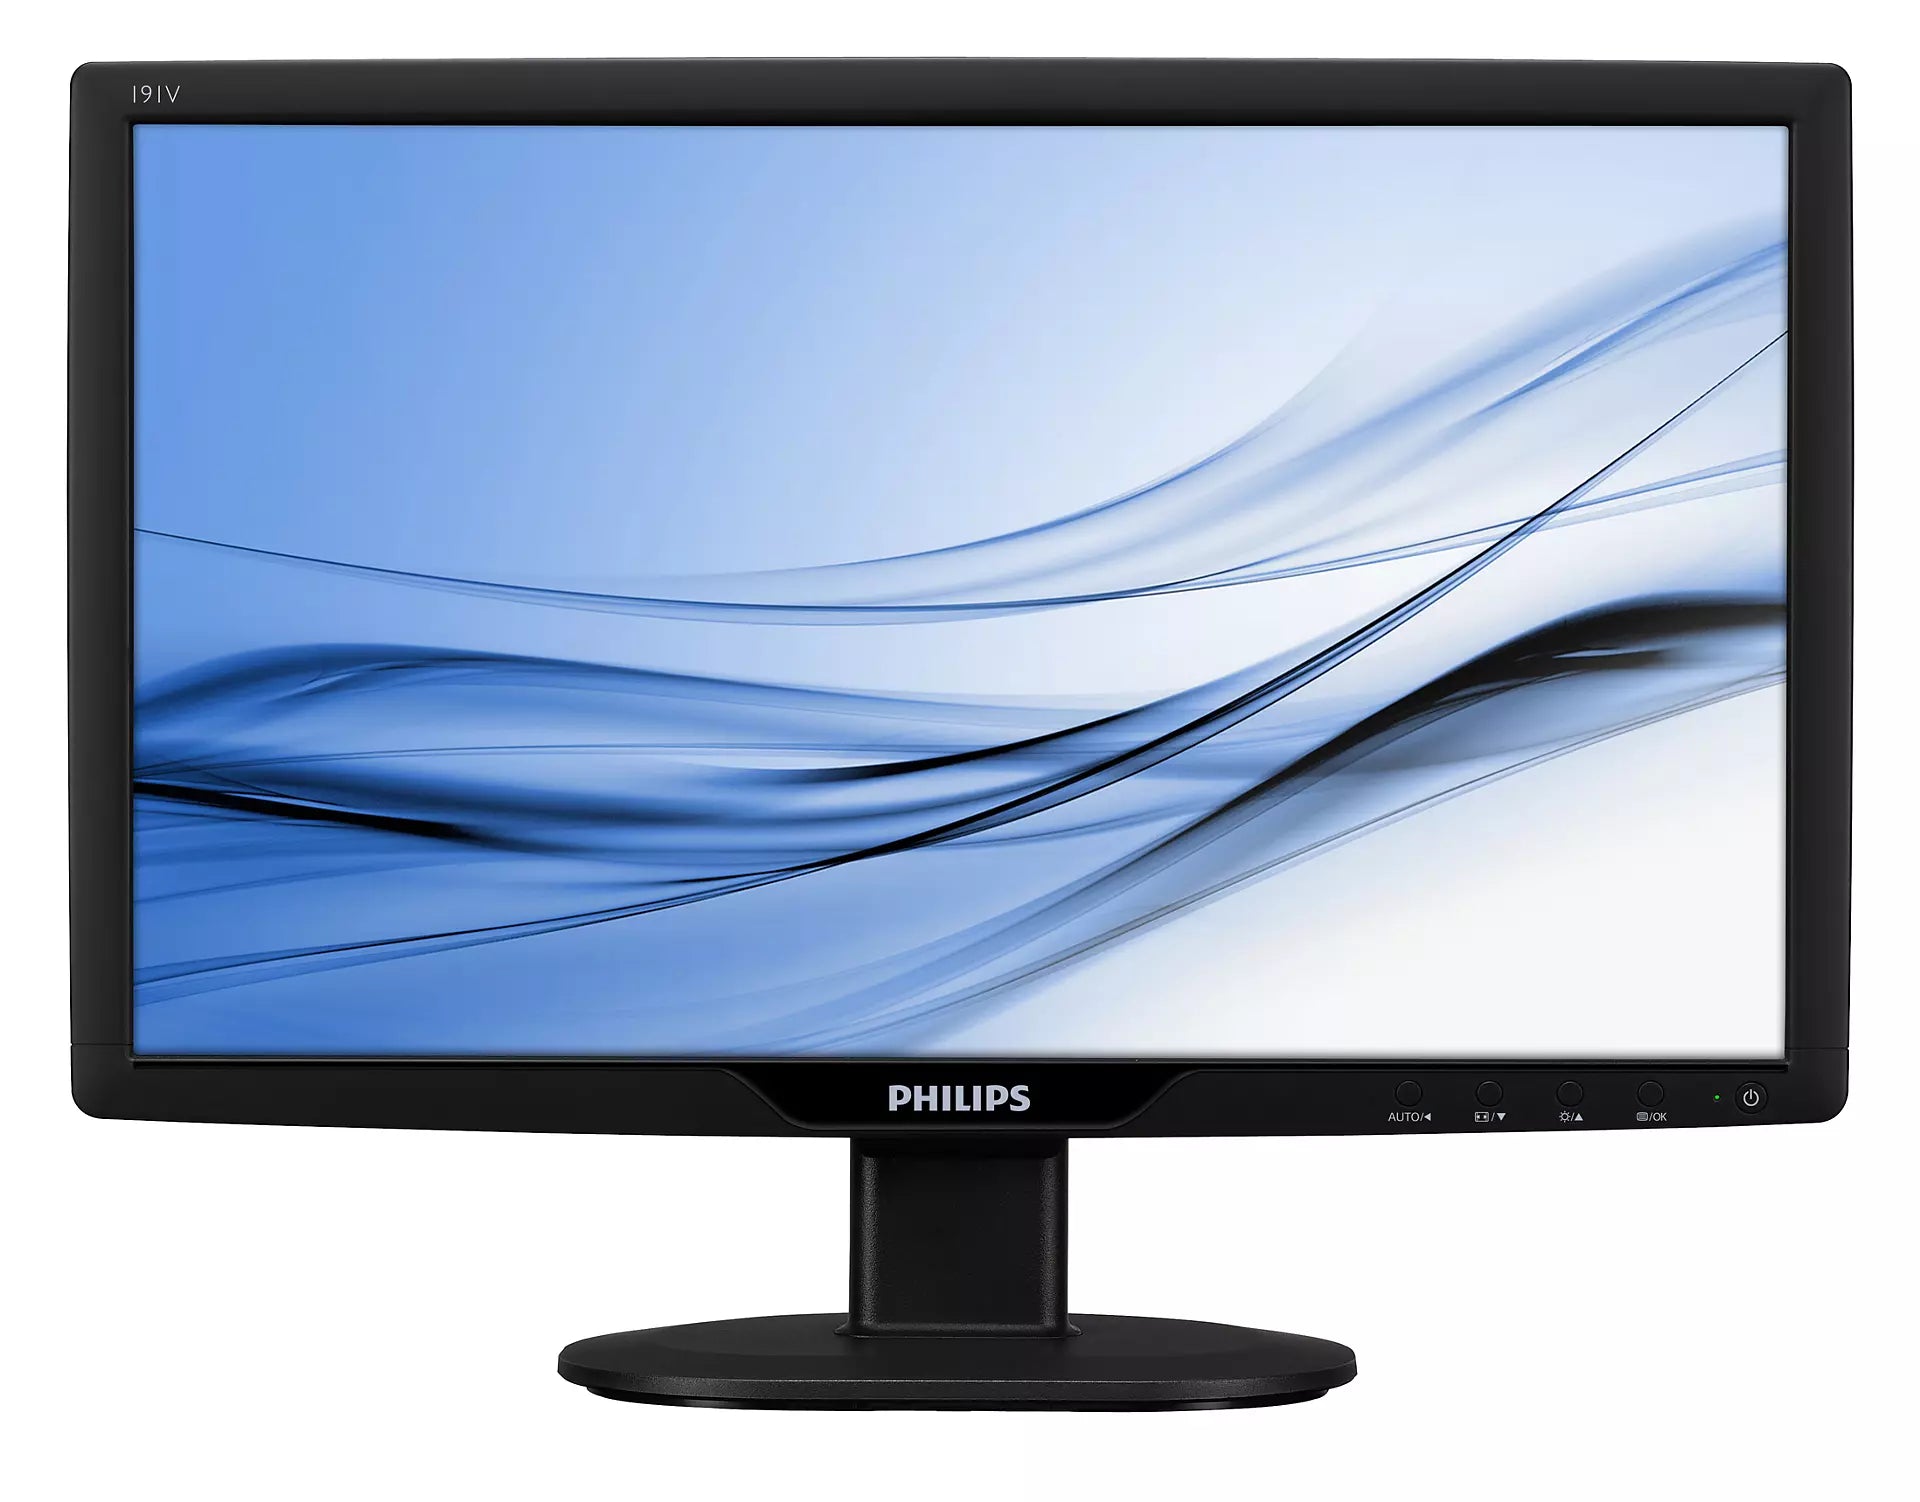 Philips 191V2 19-Zoll-TFT-LCD-Monitor 1920 x 1080 Pixel FullHD 16:9 Helligkeit 250 cd/m2 Kontrast 1000:1 Reaktionszeit 5 ms